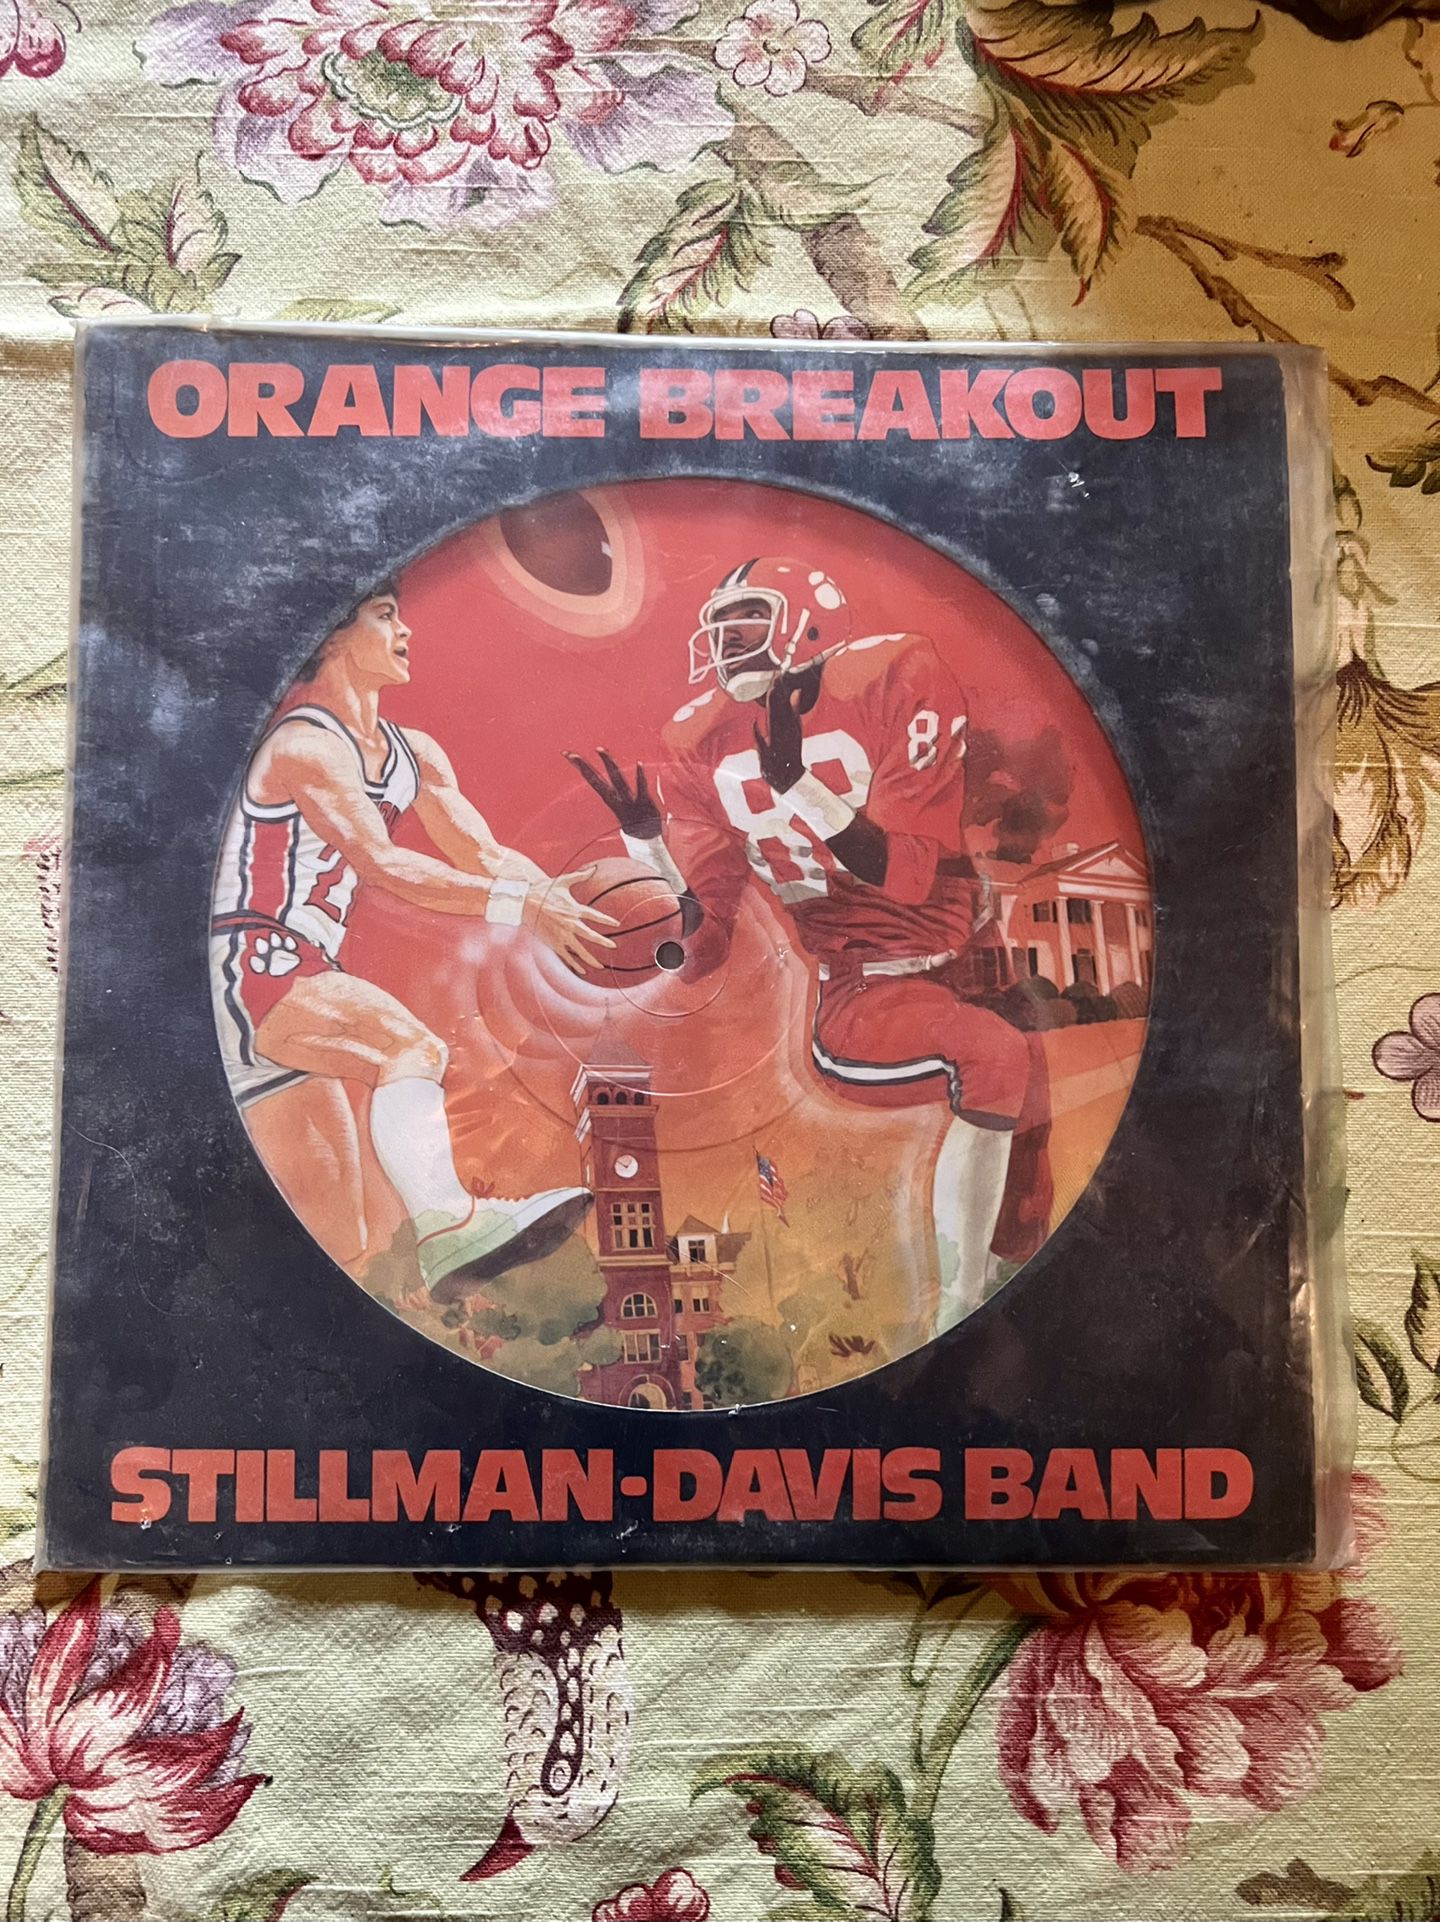 1981 Vintage Vinyl Album - ORANGE BREAKOUT “The Celebration Of A Clemson Weekend” by STILLMAN-DAVIS BAND With Andy Griffth - Rare, Collector’s Piece! 